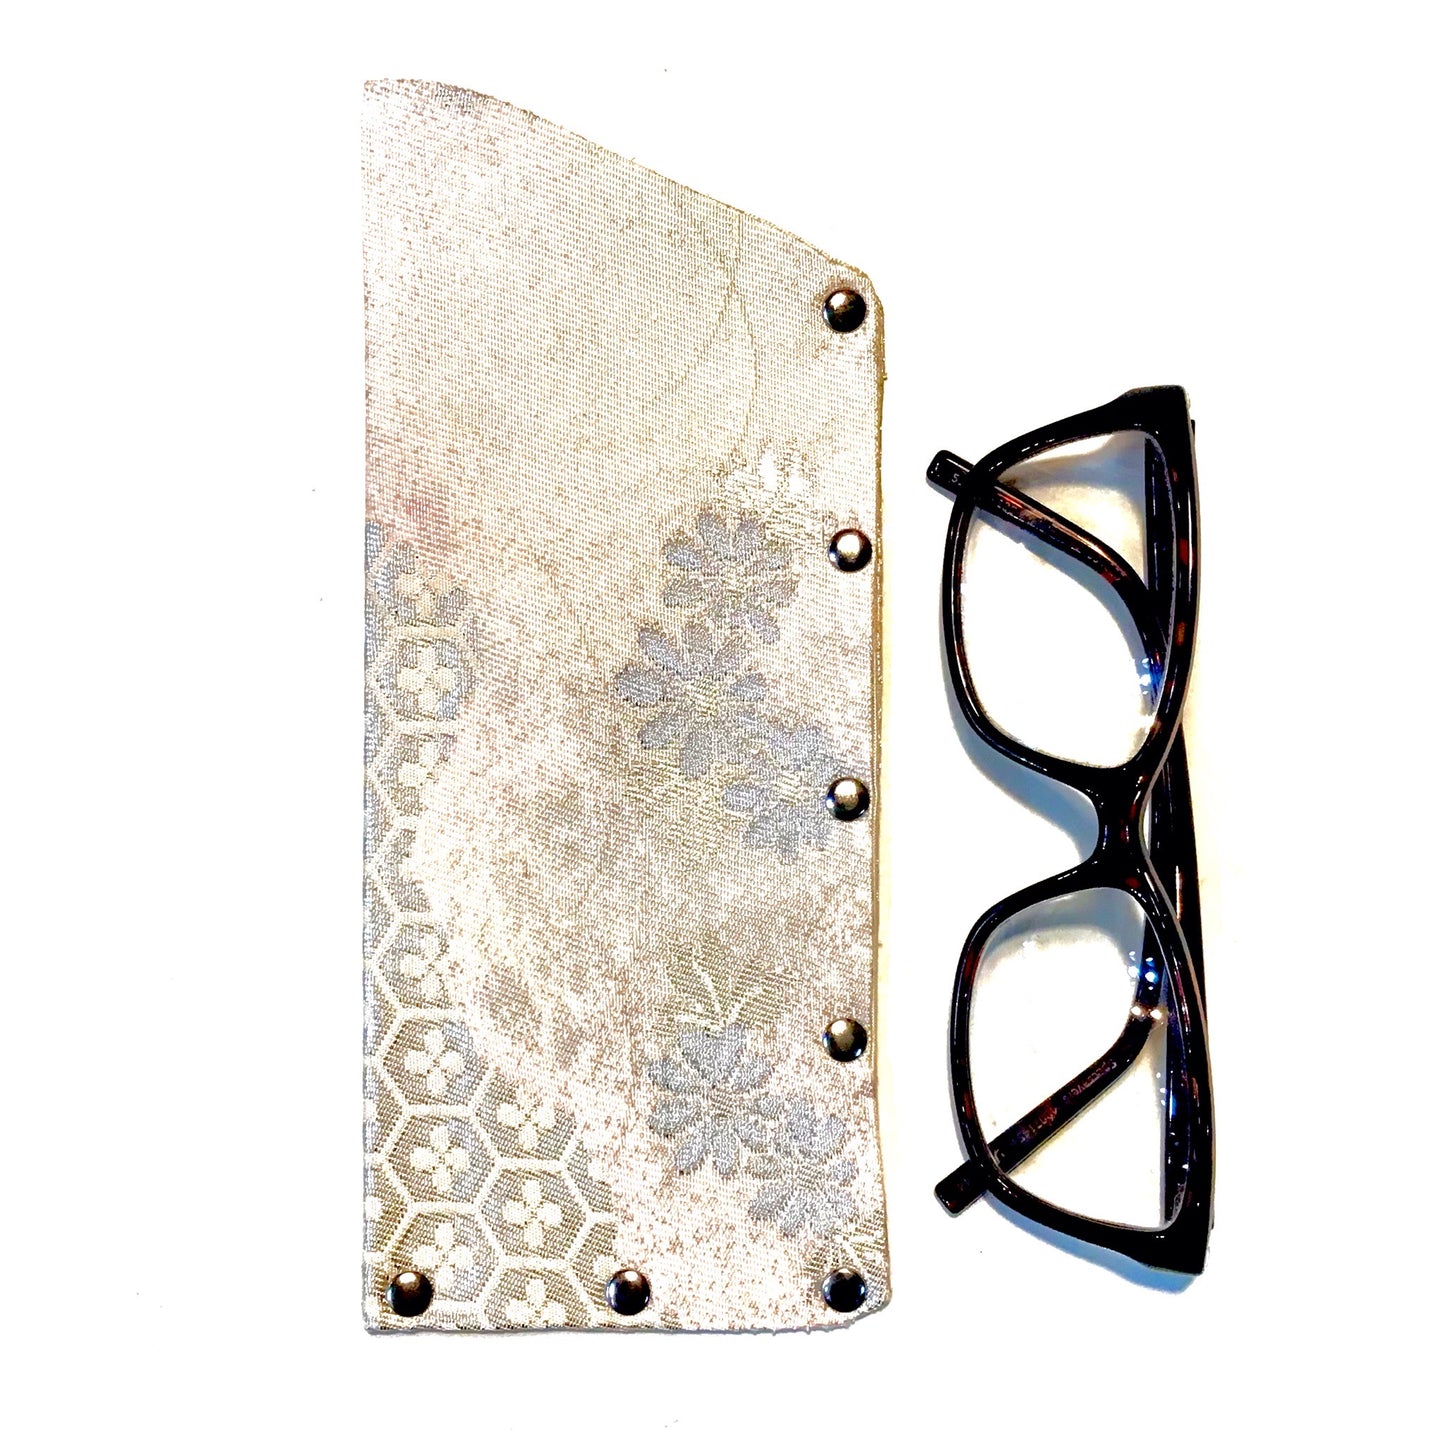 Abi-K Glasses Case ‘Subtle Blush’ 2/2